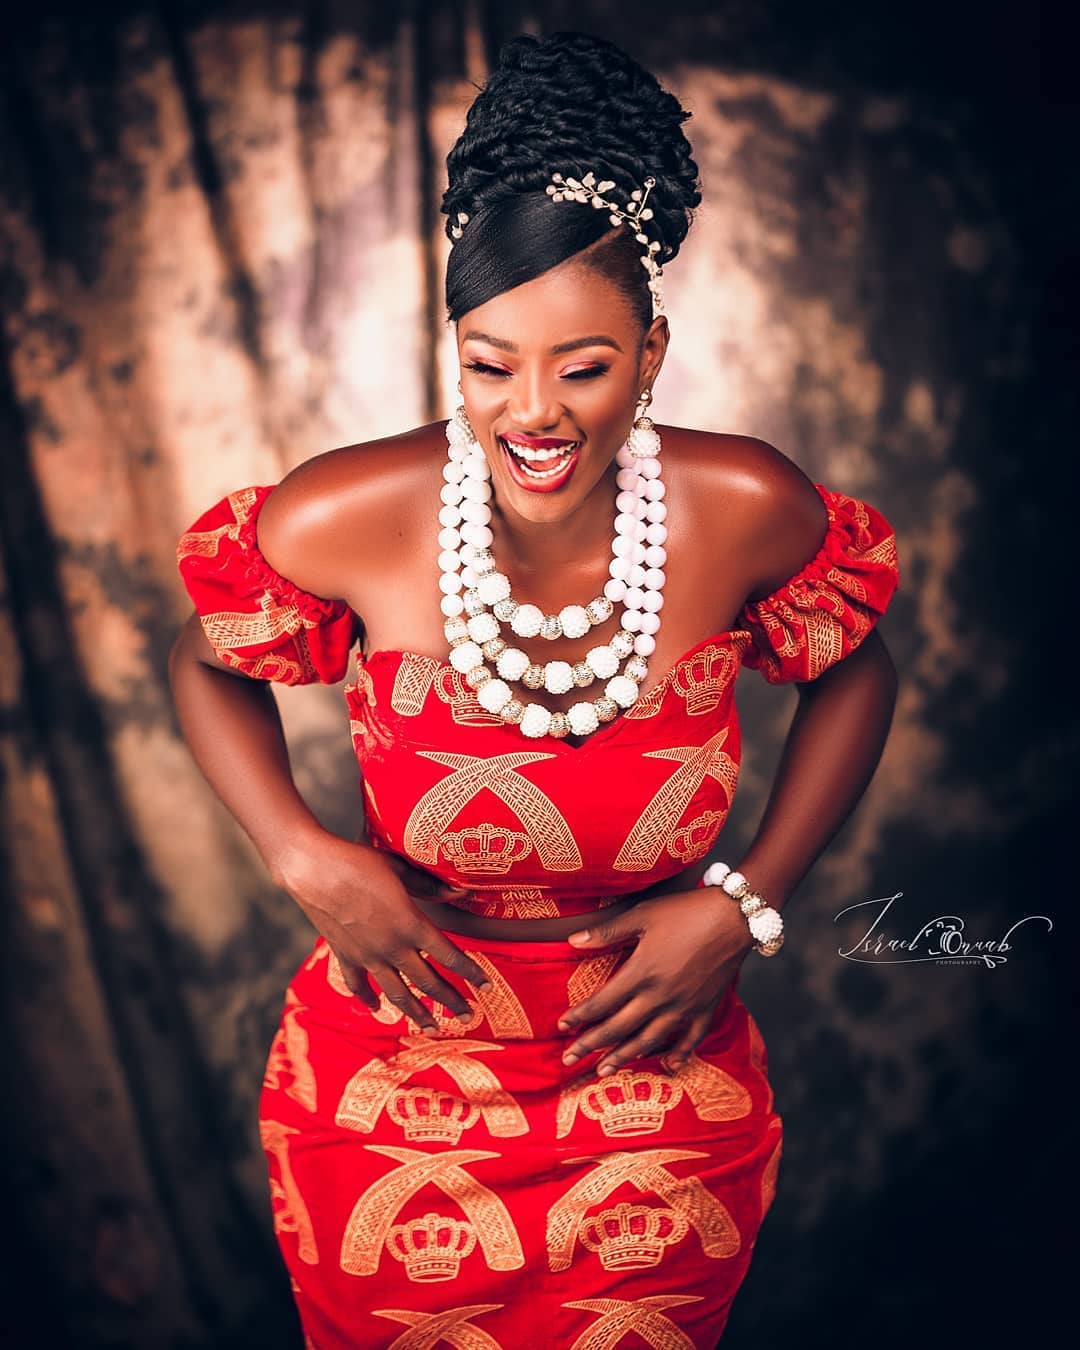 Why Are Igbo Women So Beautiful? - Culture - Nigeria